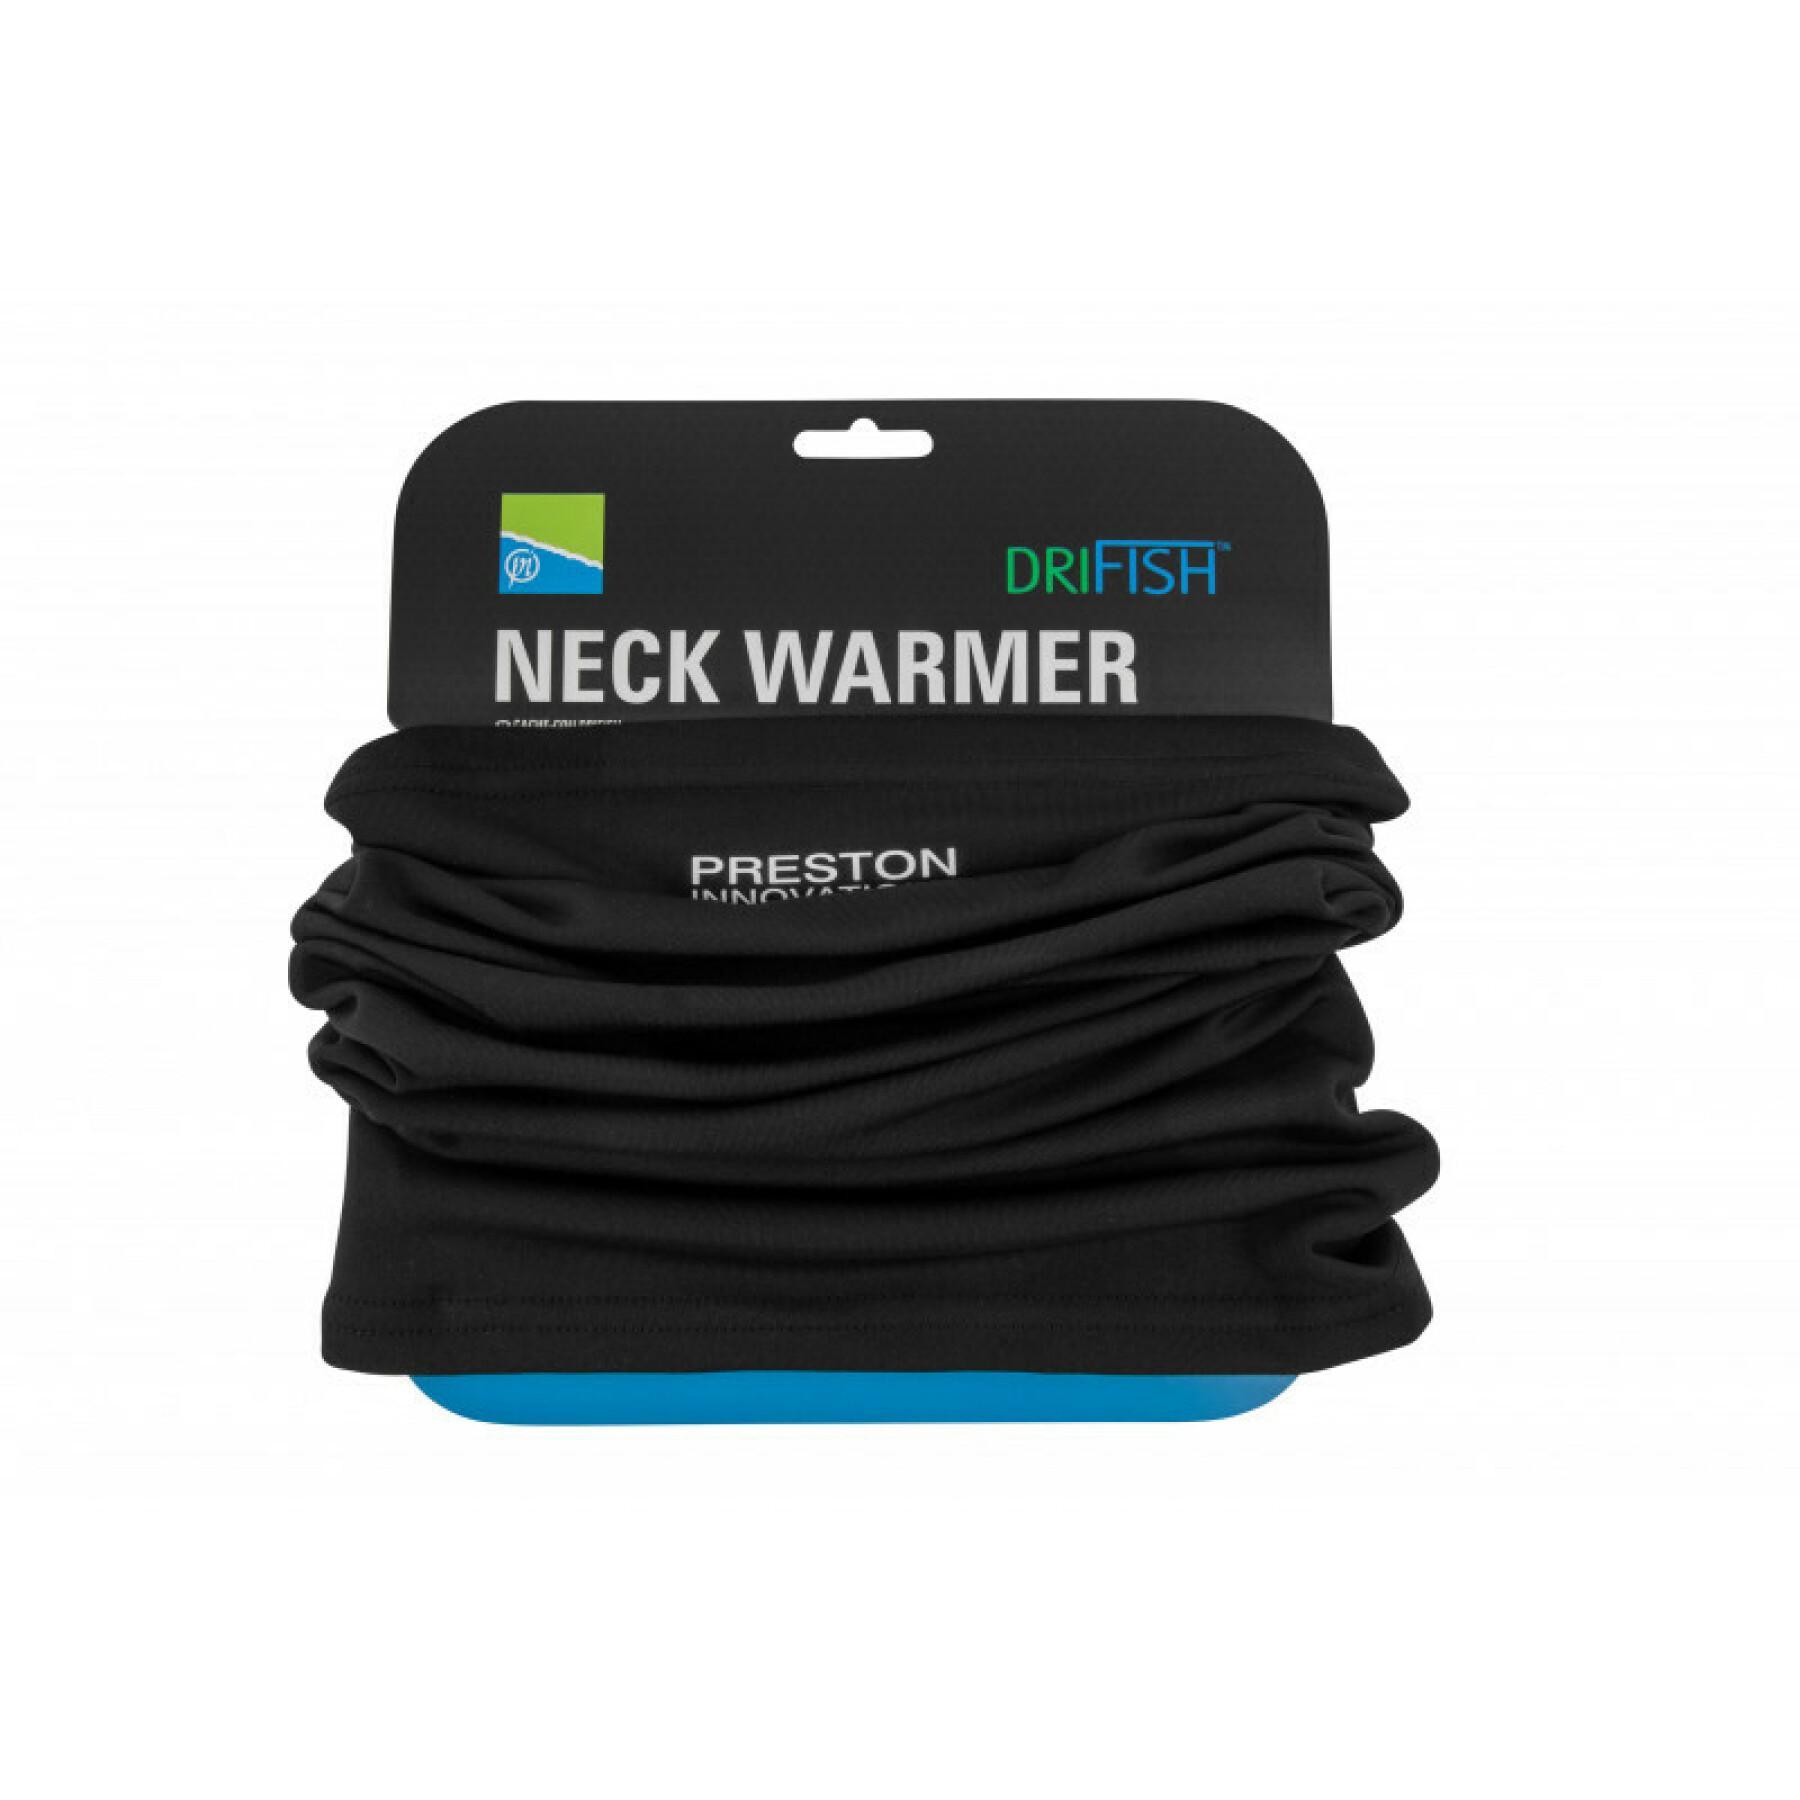 Necklace Preston drifish neck warmer